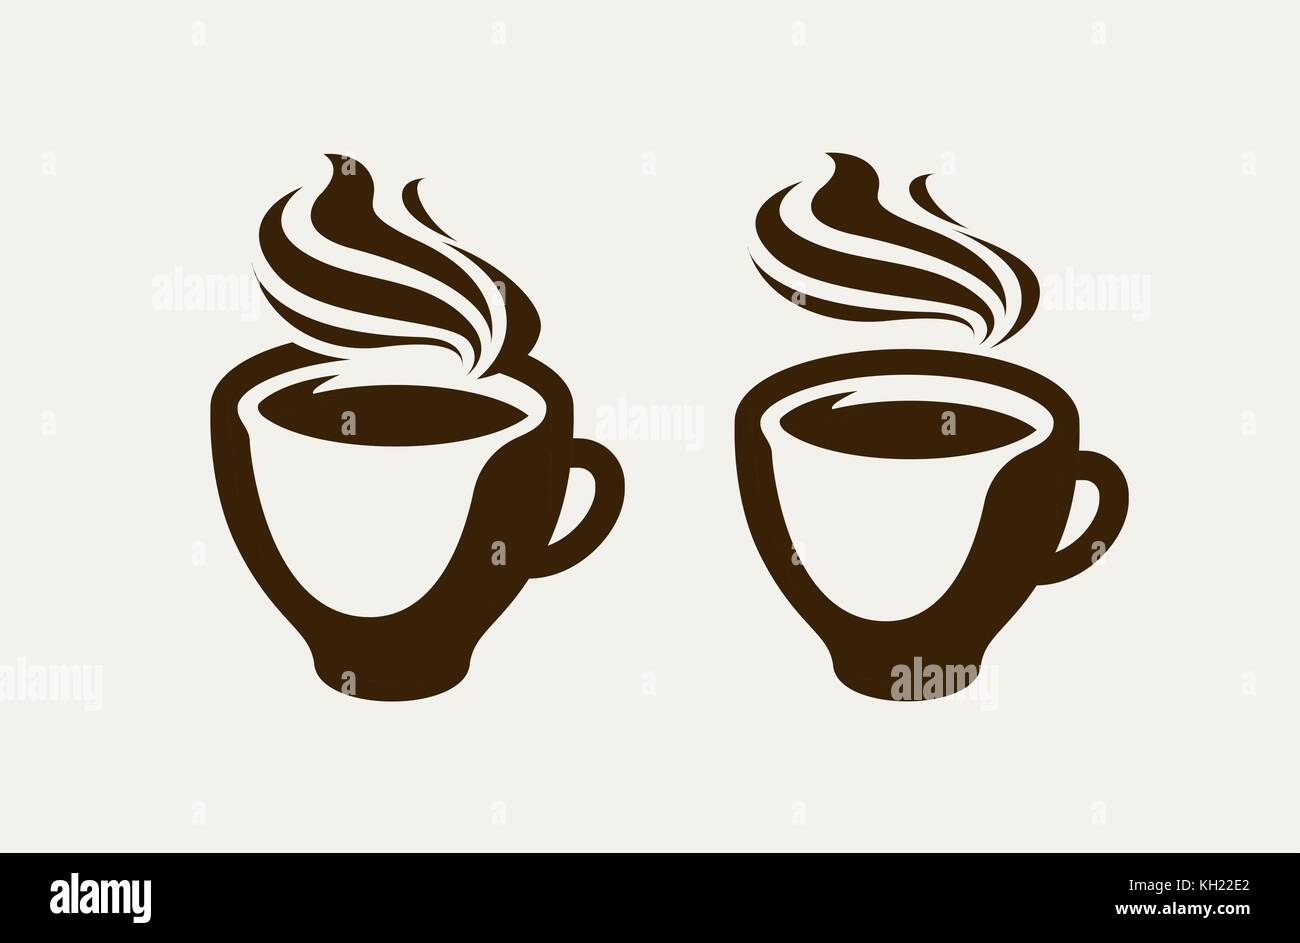 Cafe, coffeehouse logo or symbol. Coffee cup, espresso, tea icon. Vector illustration Stock Vector